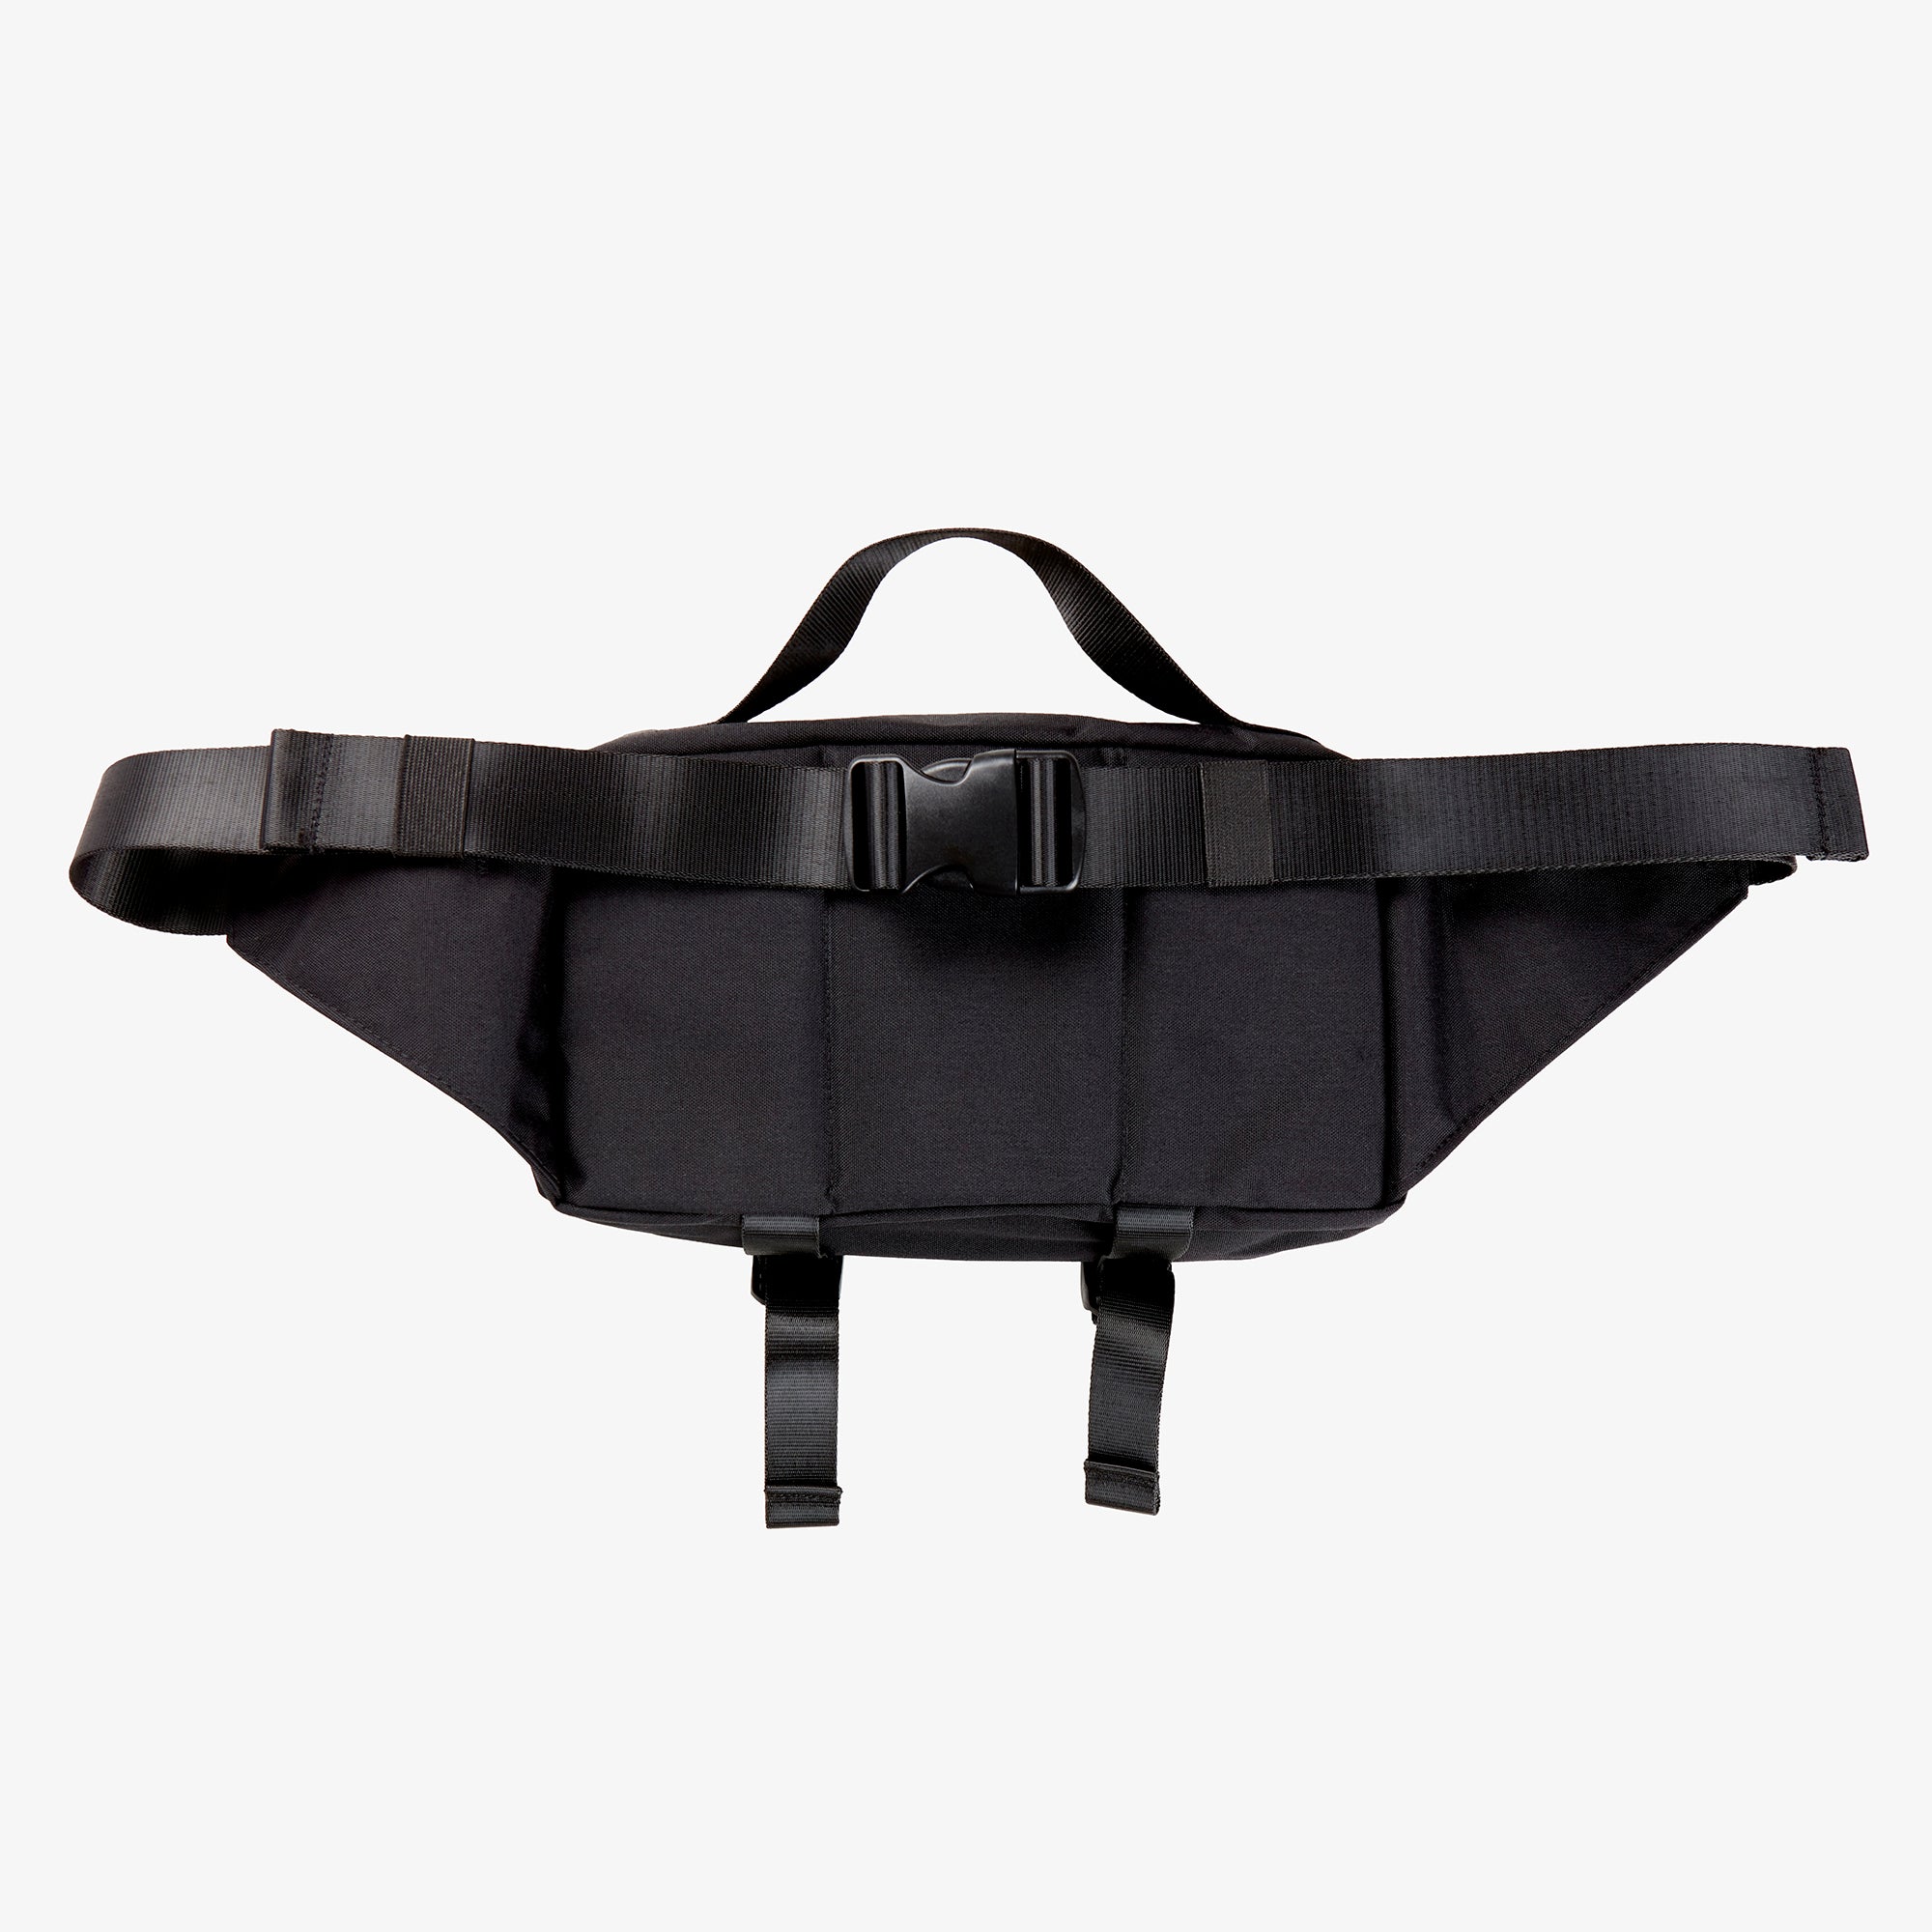 The backside of black nylon hip bag with black waist belt and top handle.